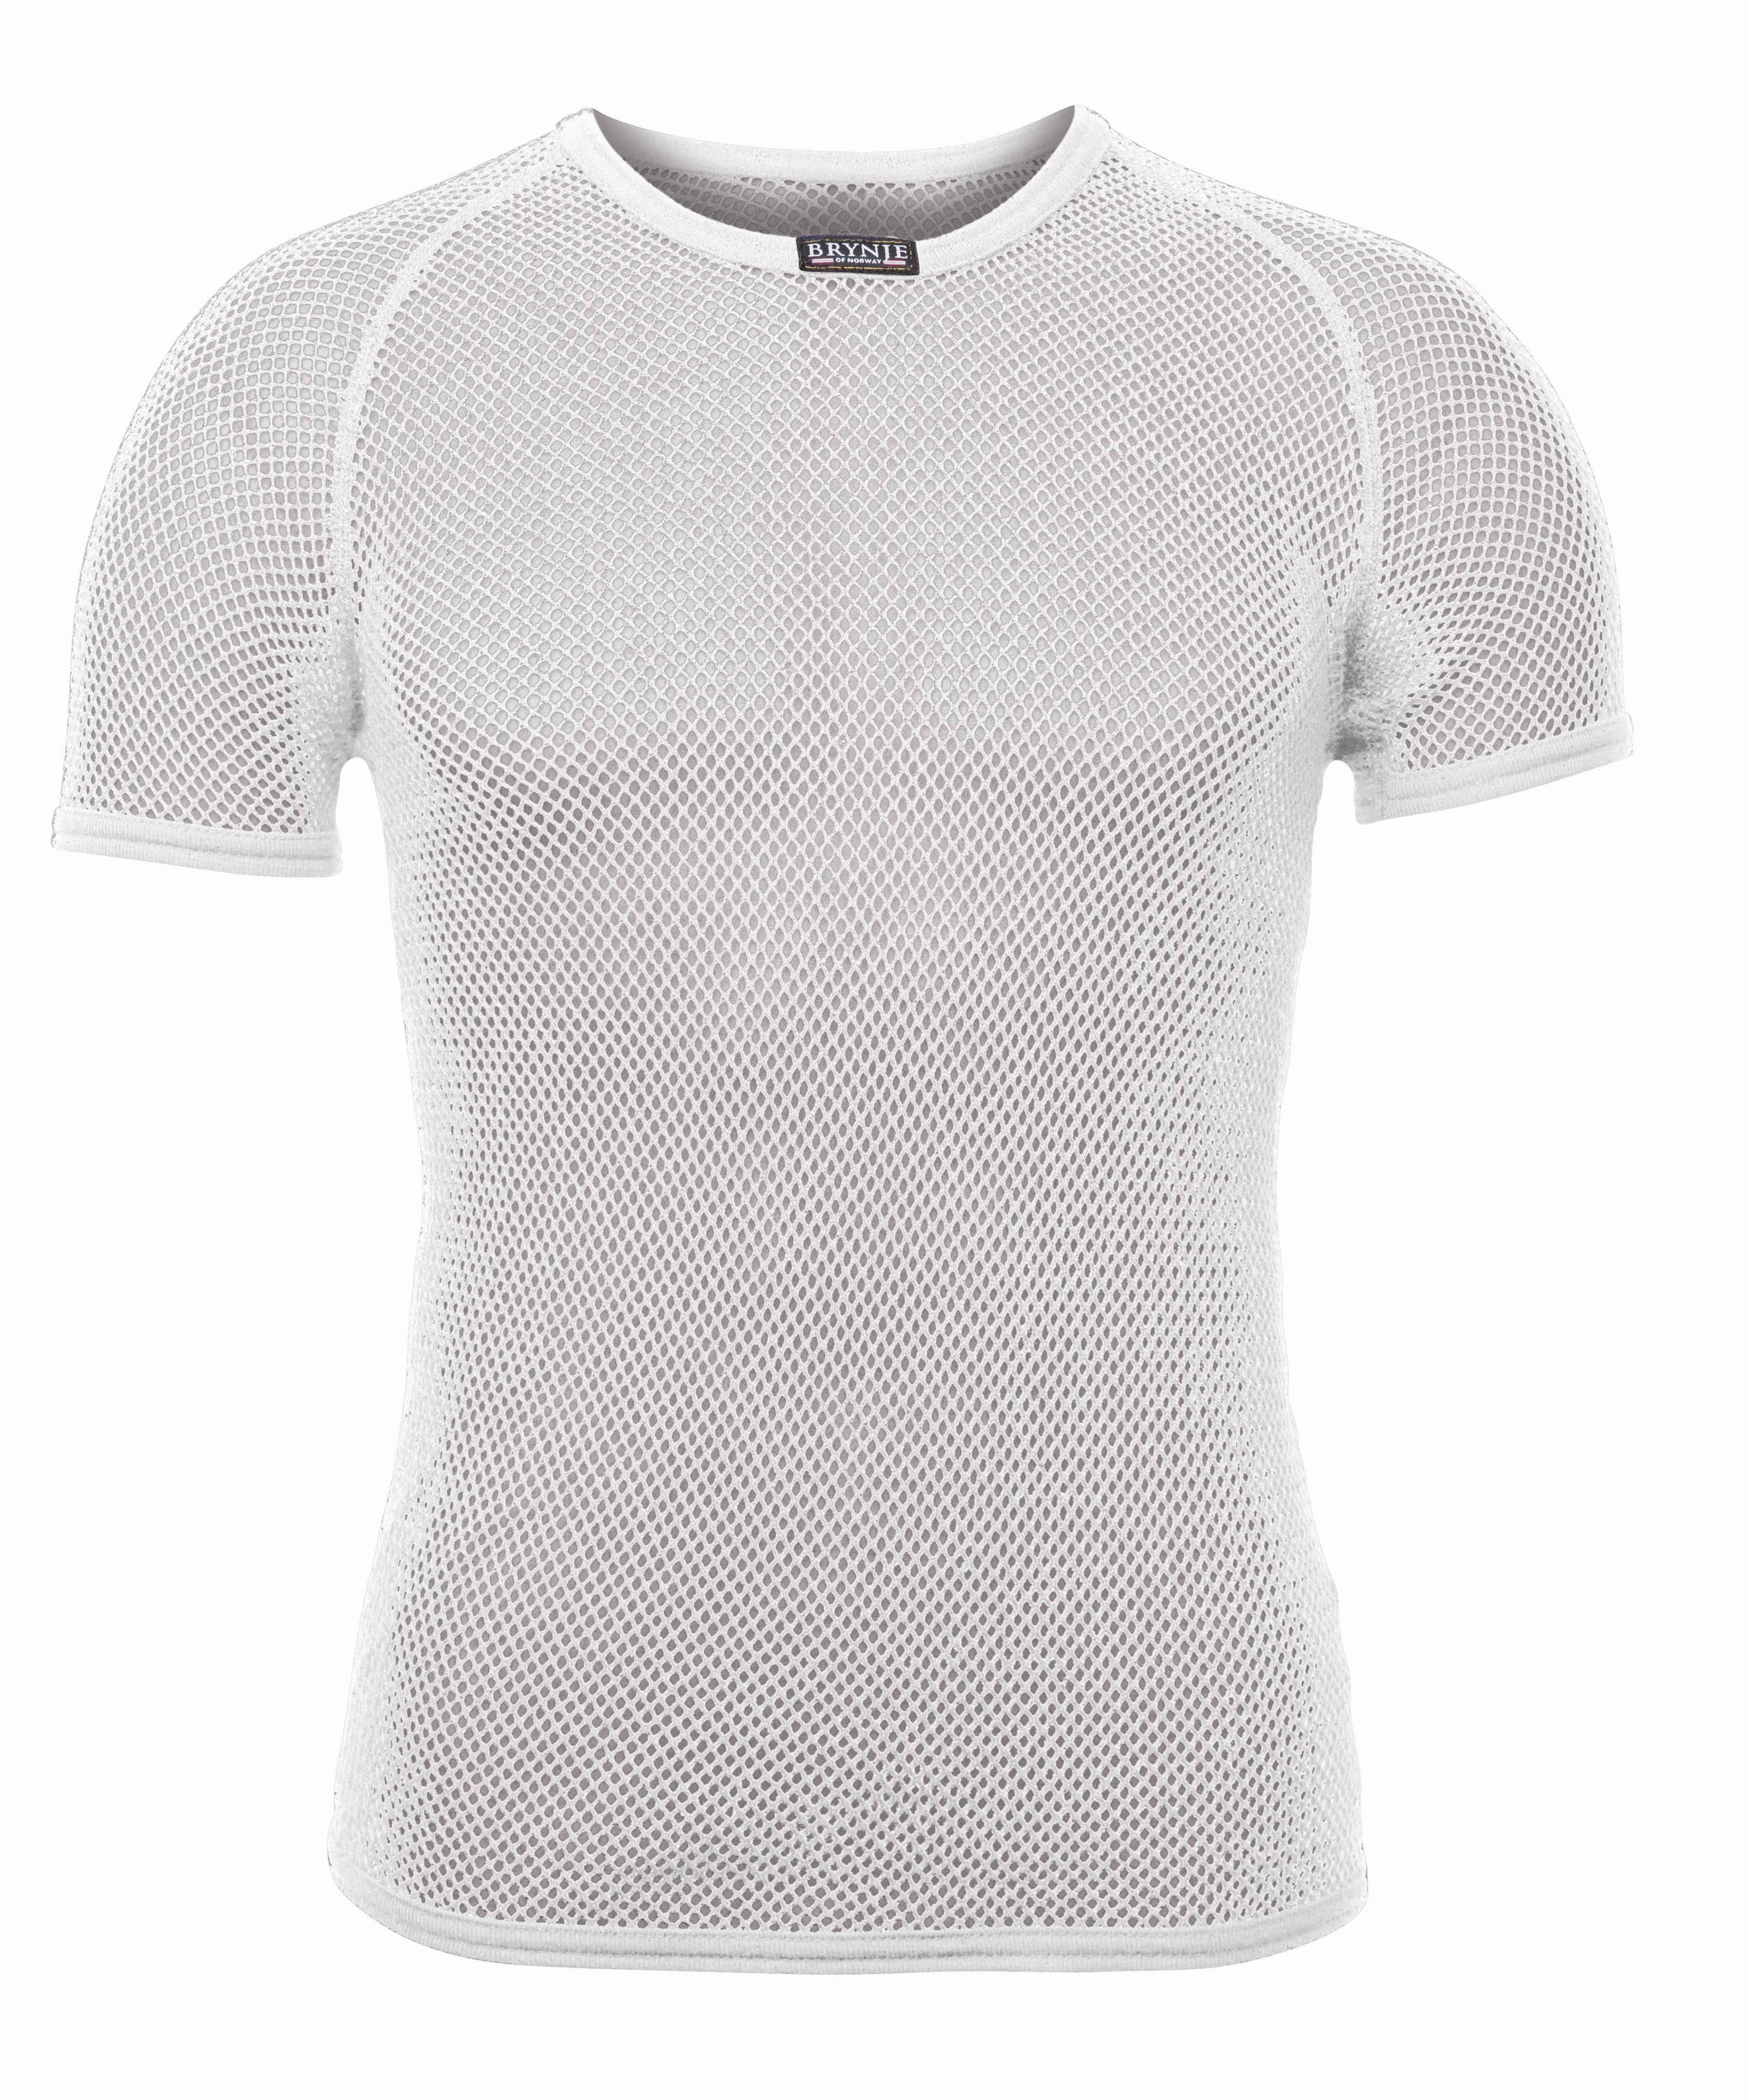 Brynje Super Thermo T-shirt, base layer, base layer t-shirt, mesh ...